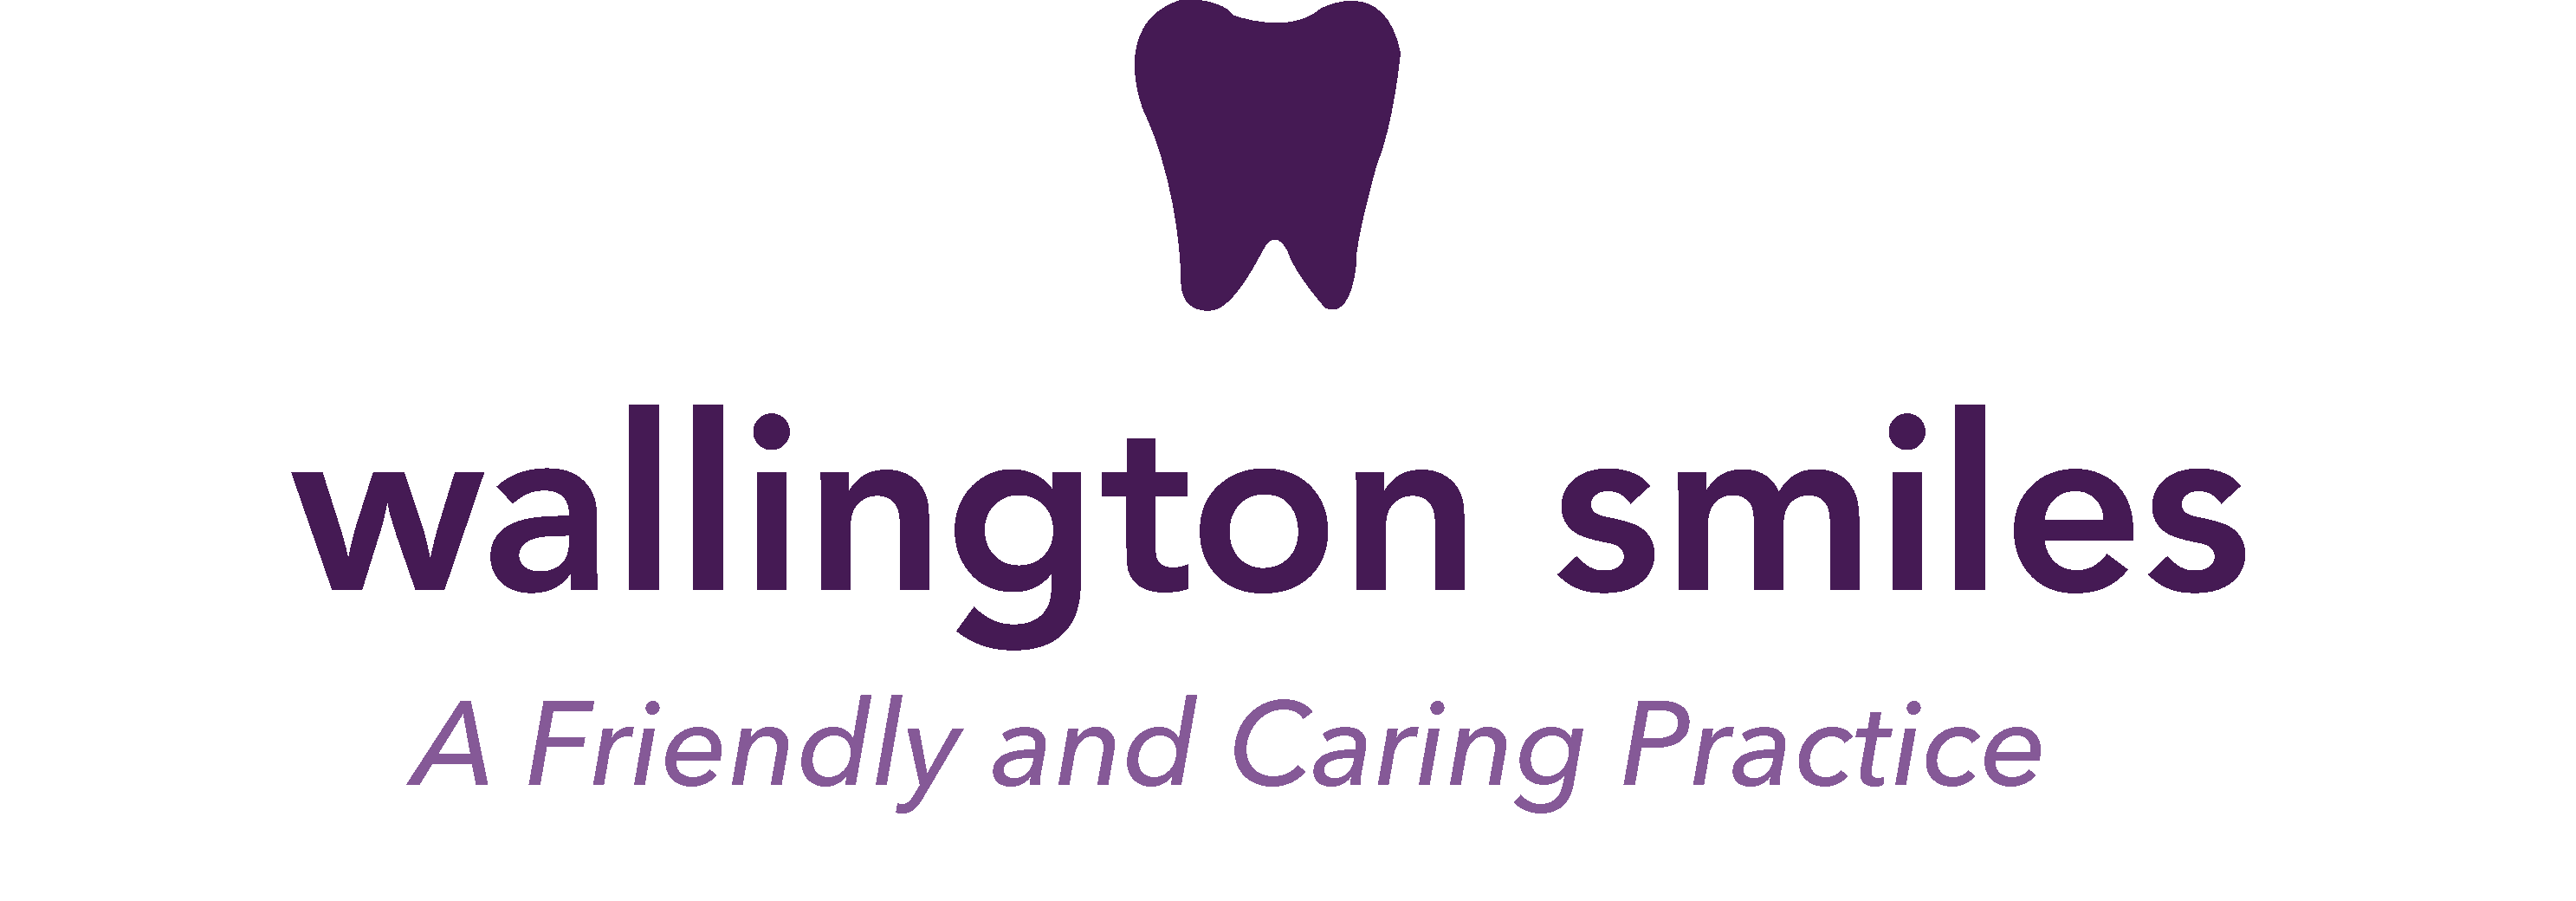 dentists Wallington Smiles - Logo